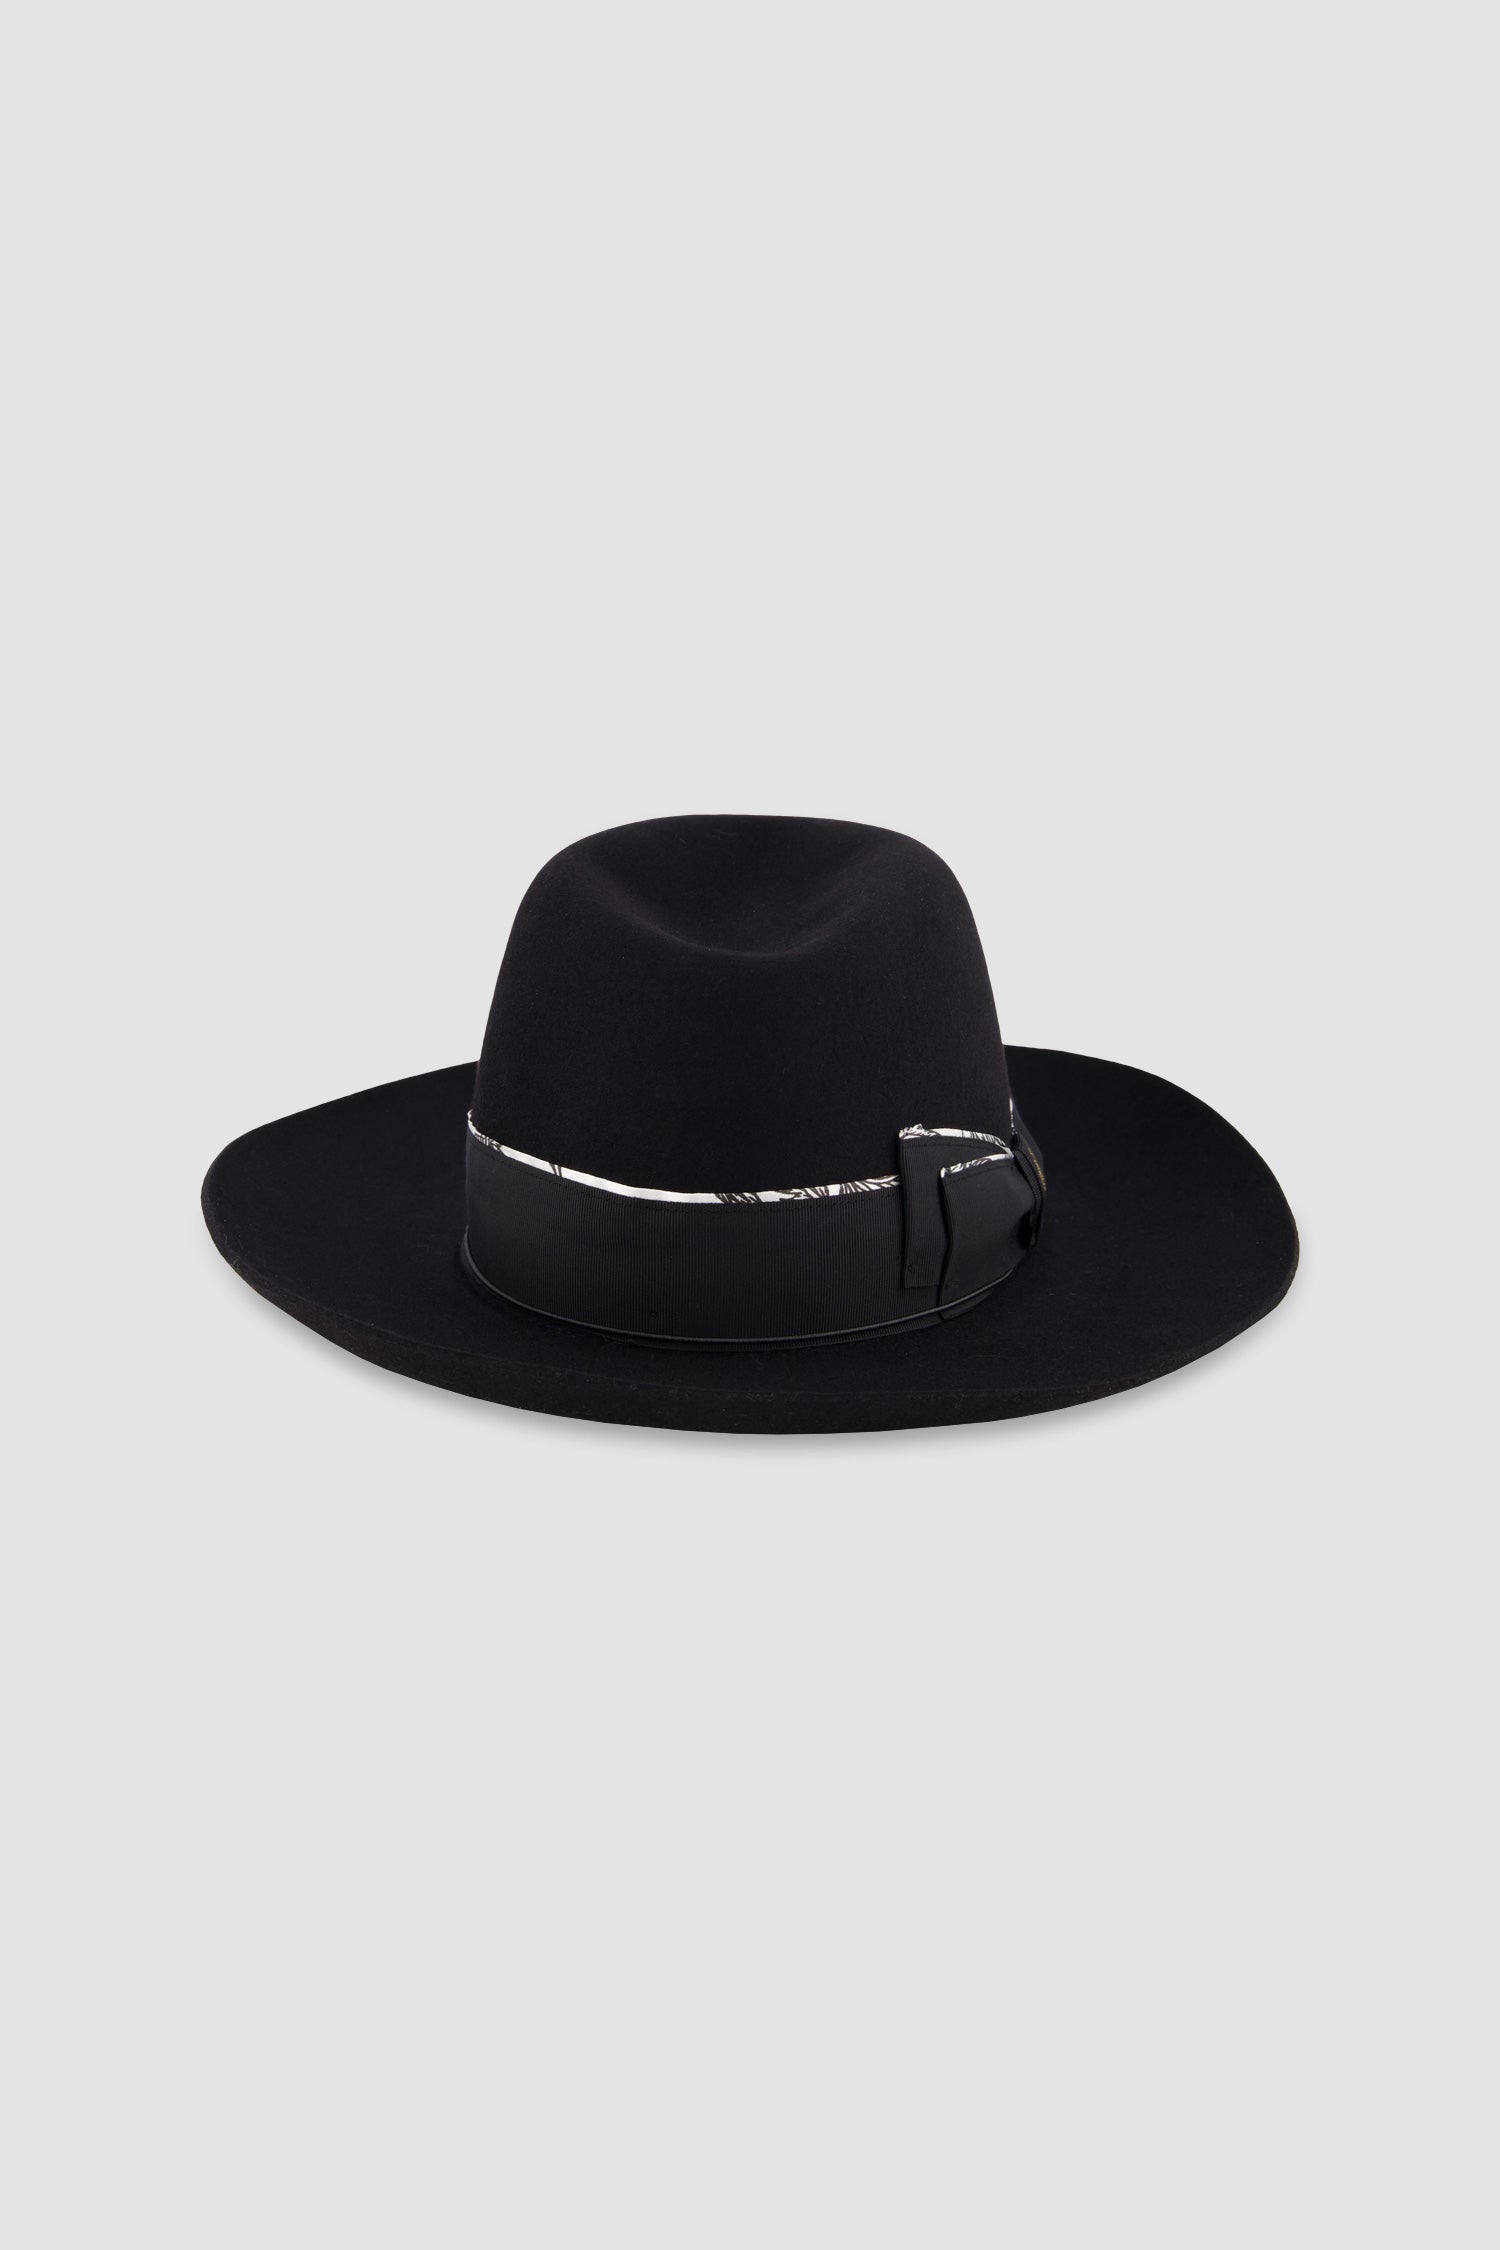 Borsalino Black Alessandria Rasato Tesa Larga Hat